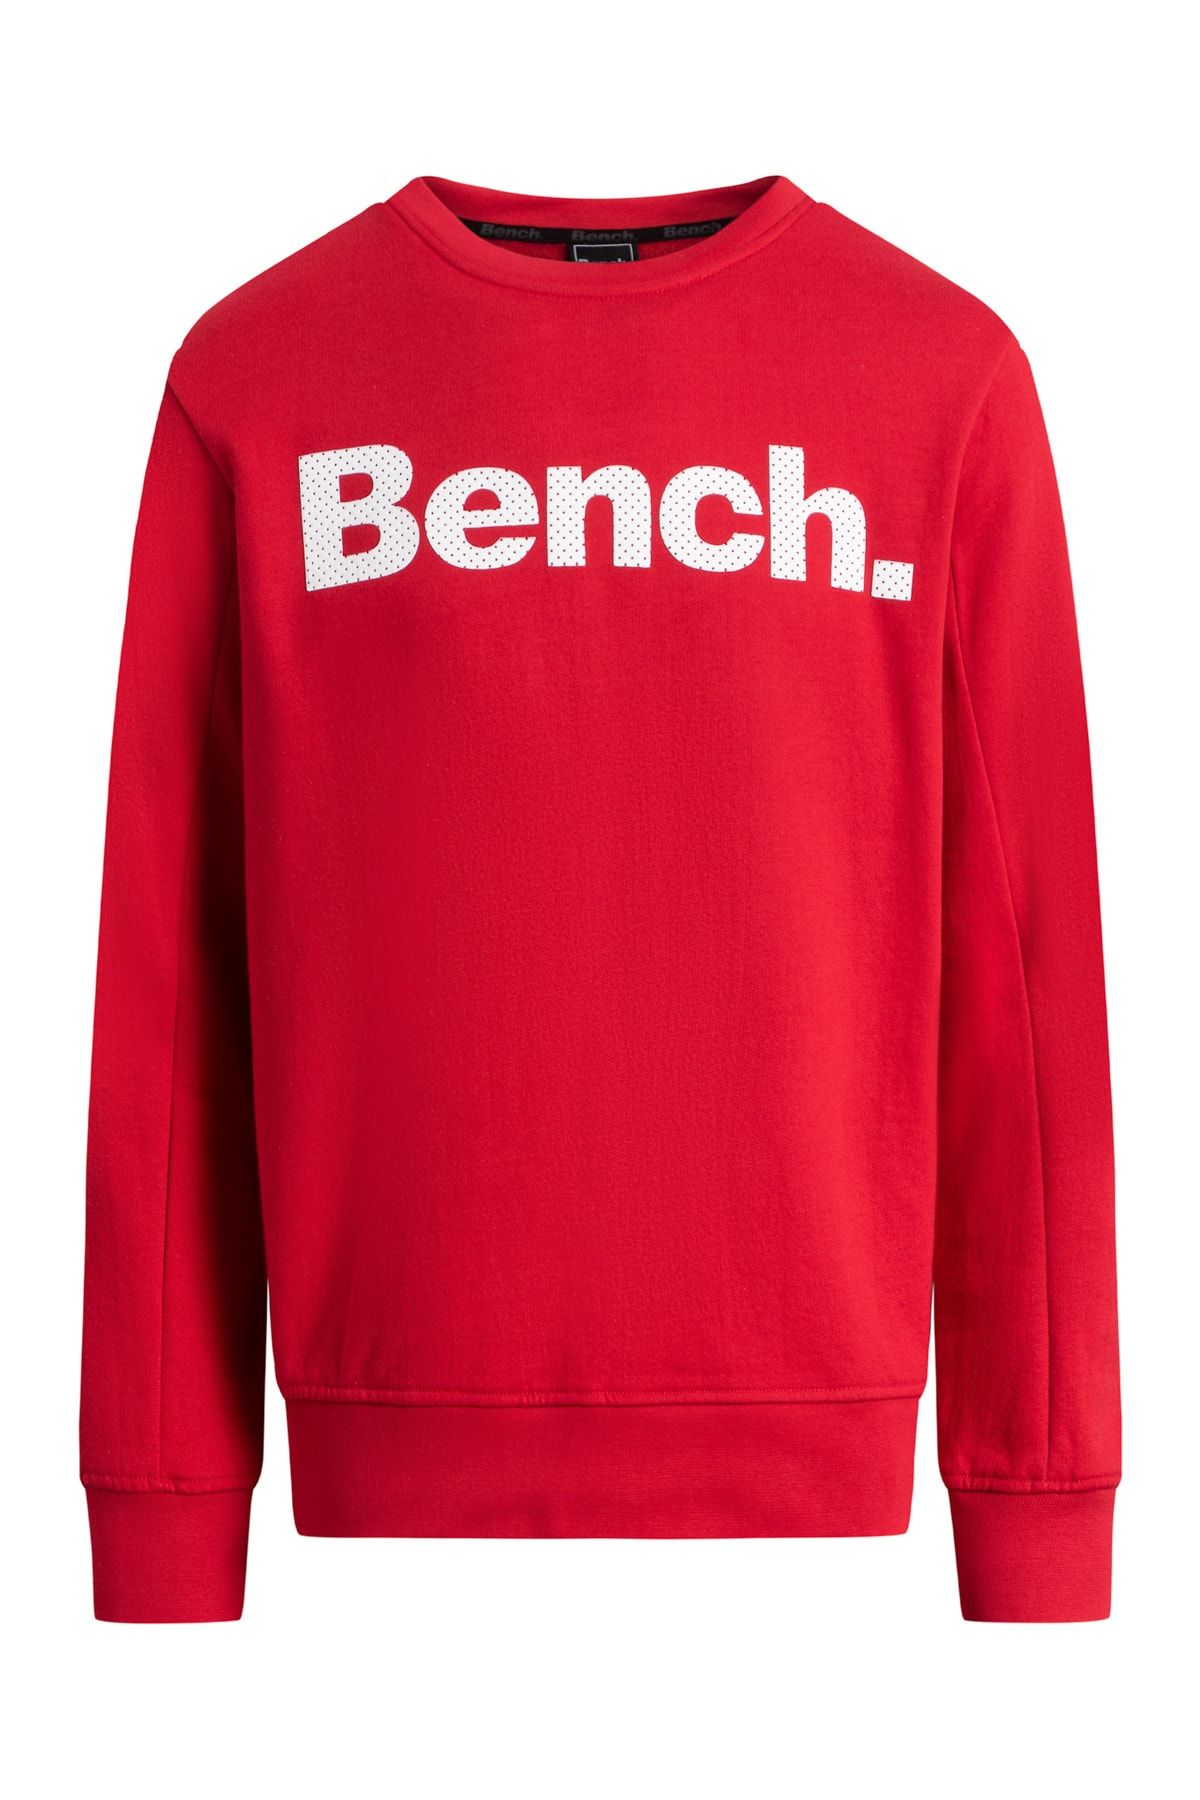 - Regular Red fit BENCH - - Sweatshirt Trendyol